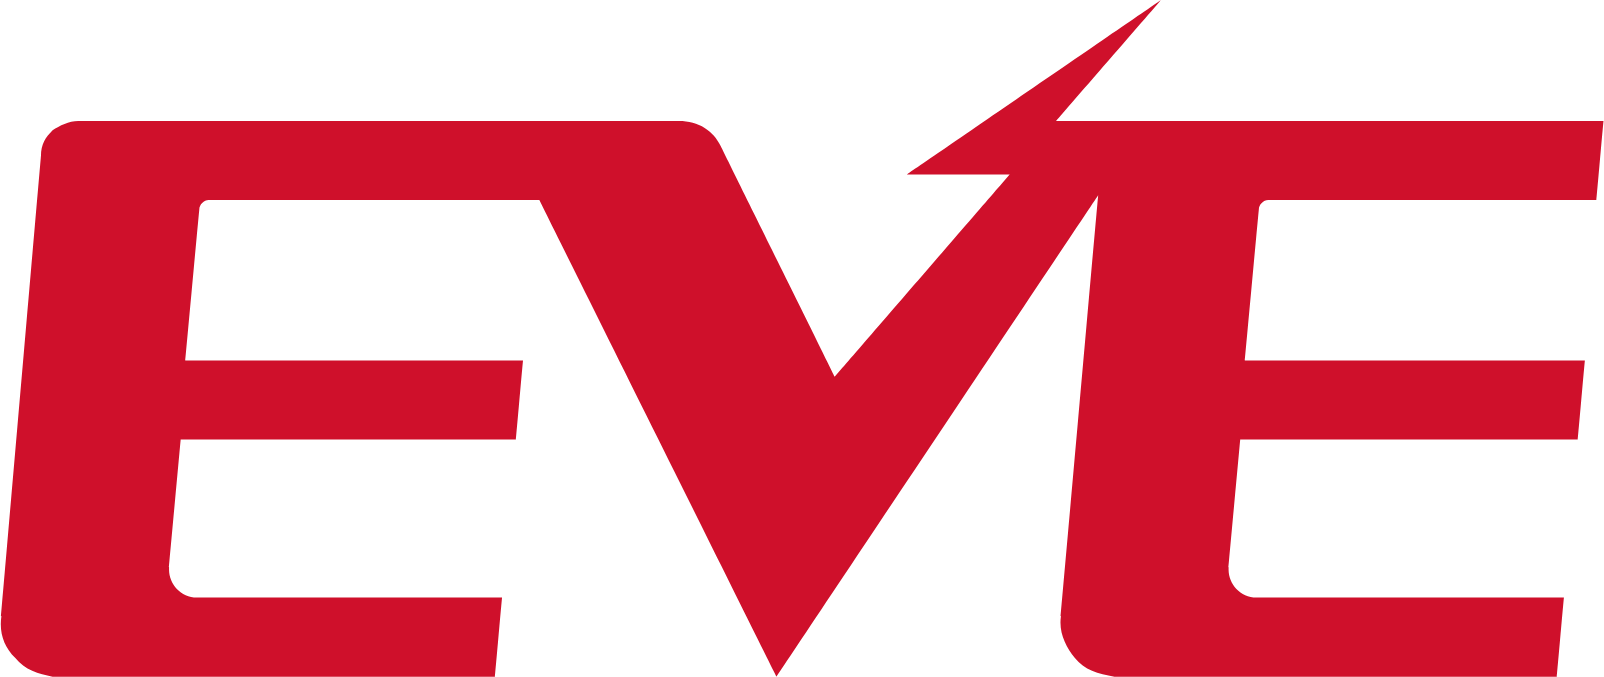 EVE Energy logo (PNG transparent)